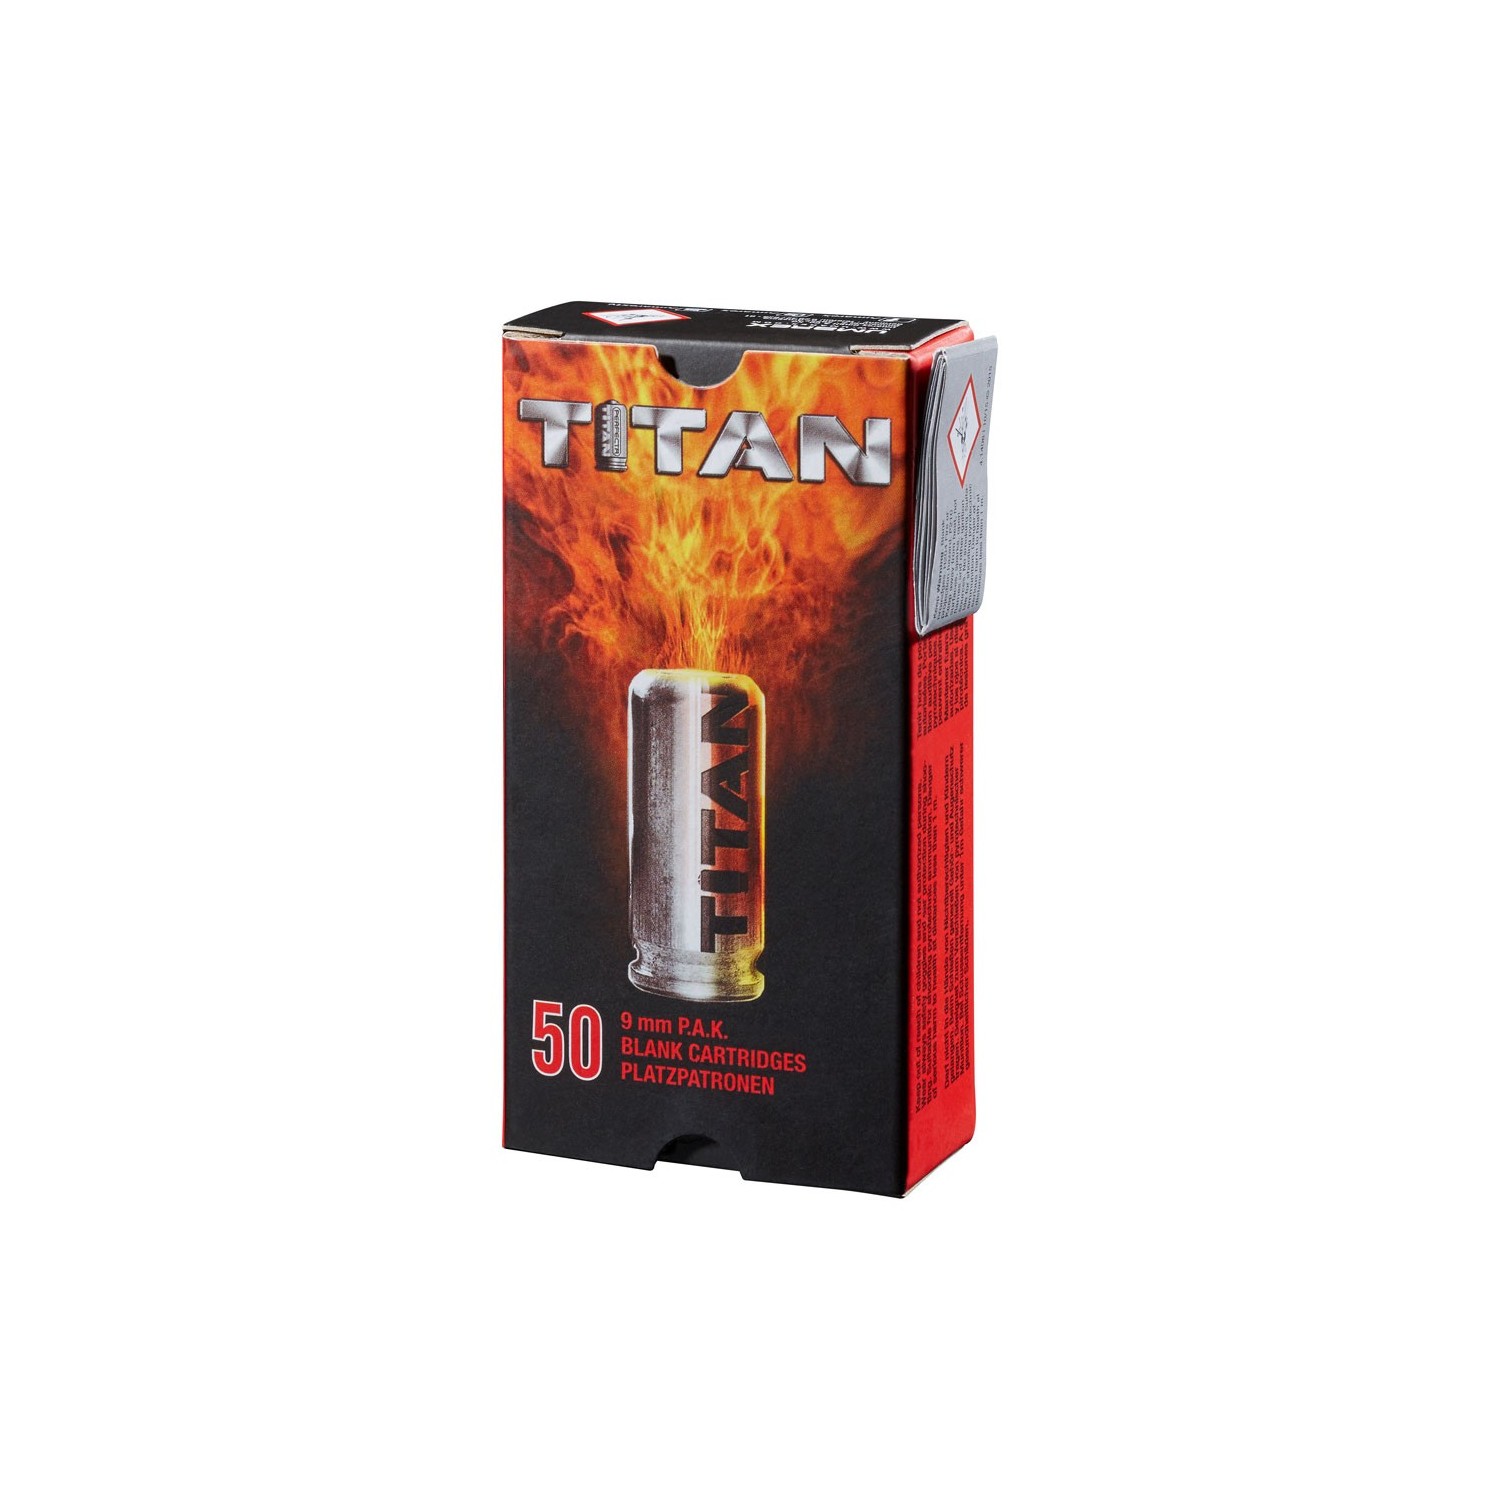 Perfecta Titan Platzpatronen 9 mm P.A.K